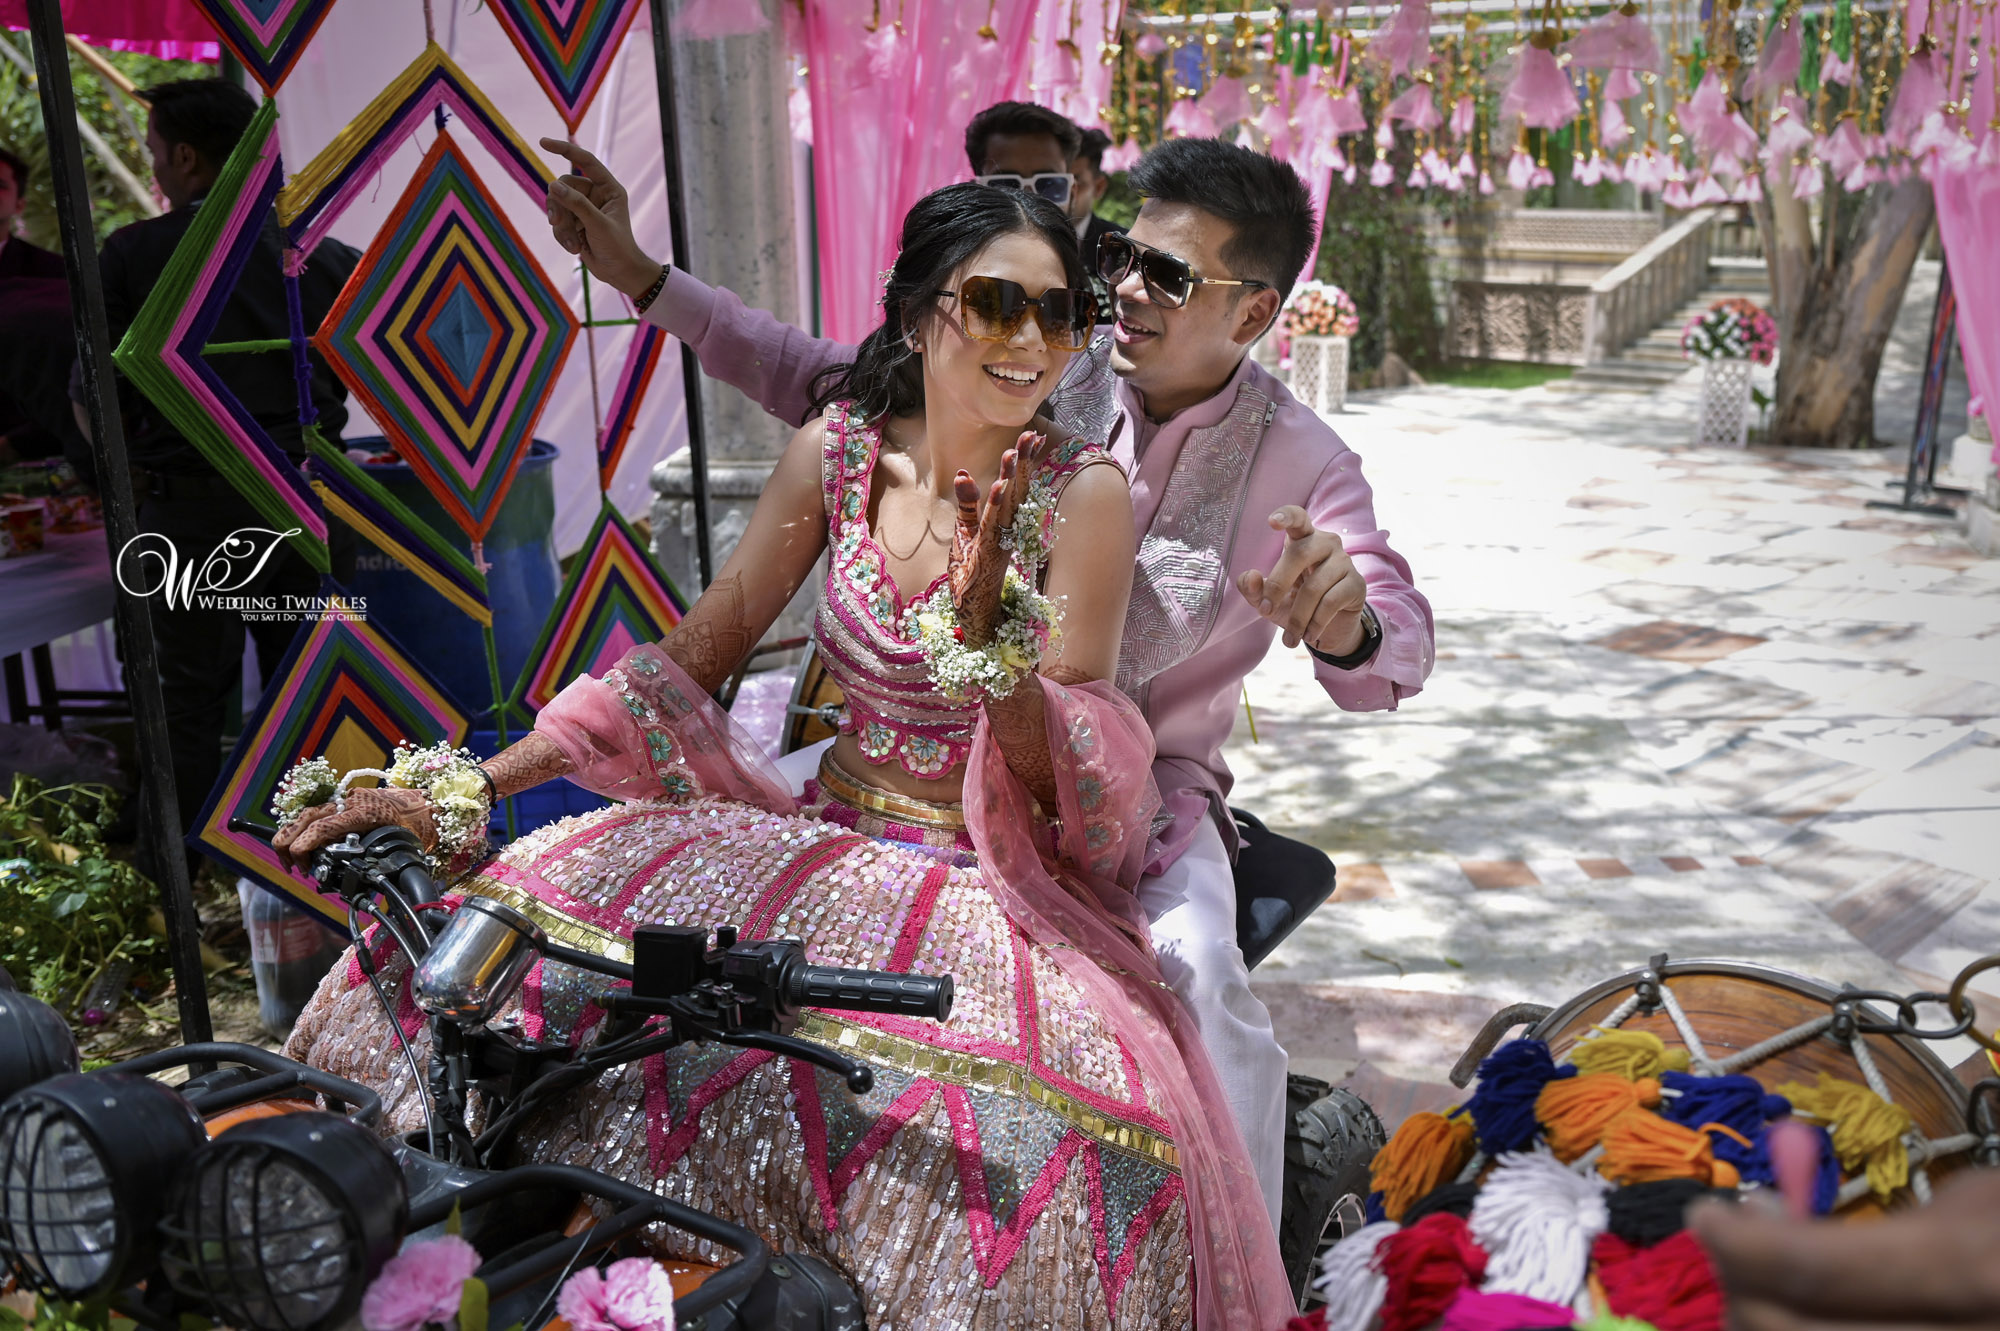 Lohagarh Fort Resort Jaipur Wedding Destination